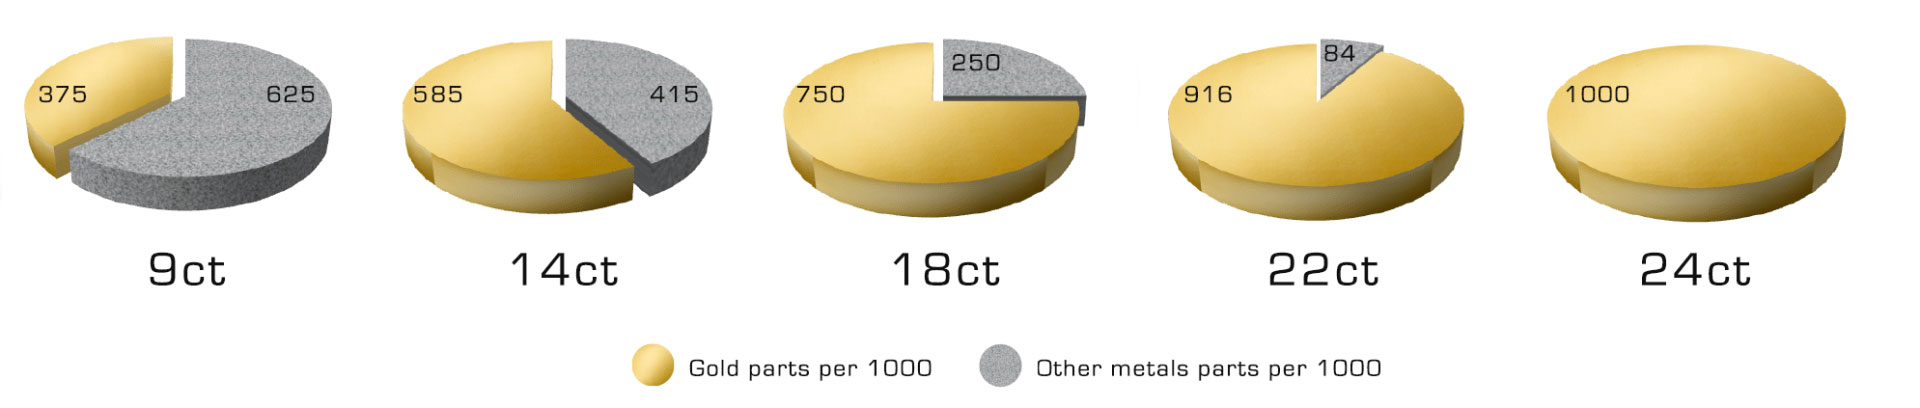 gold carat pie chart